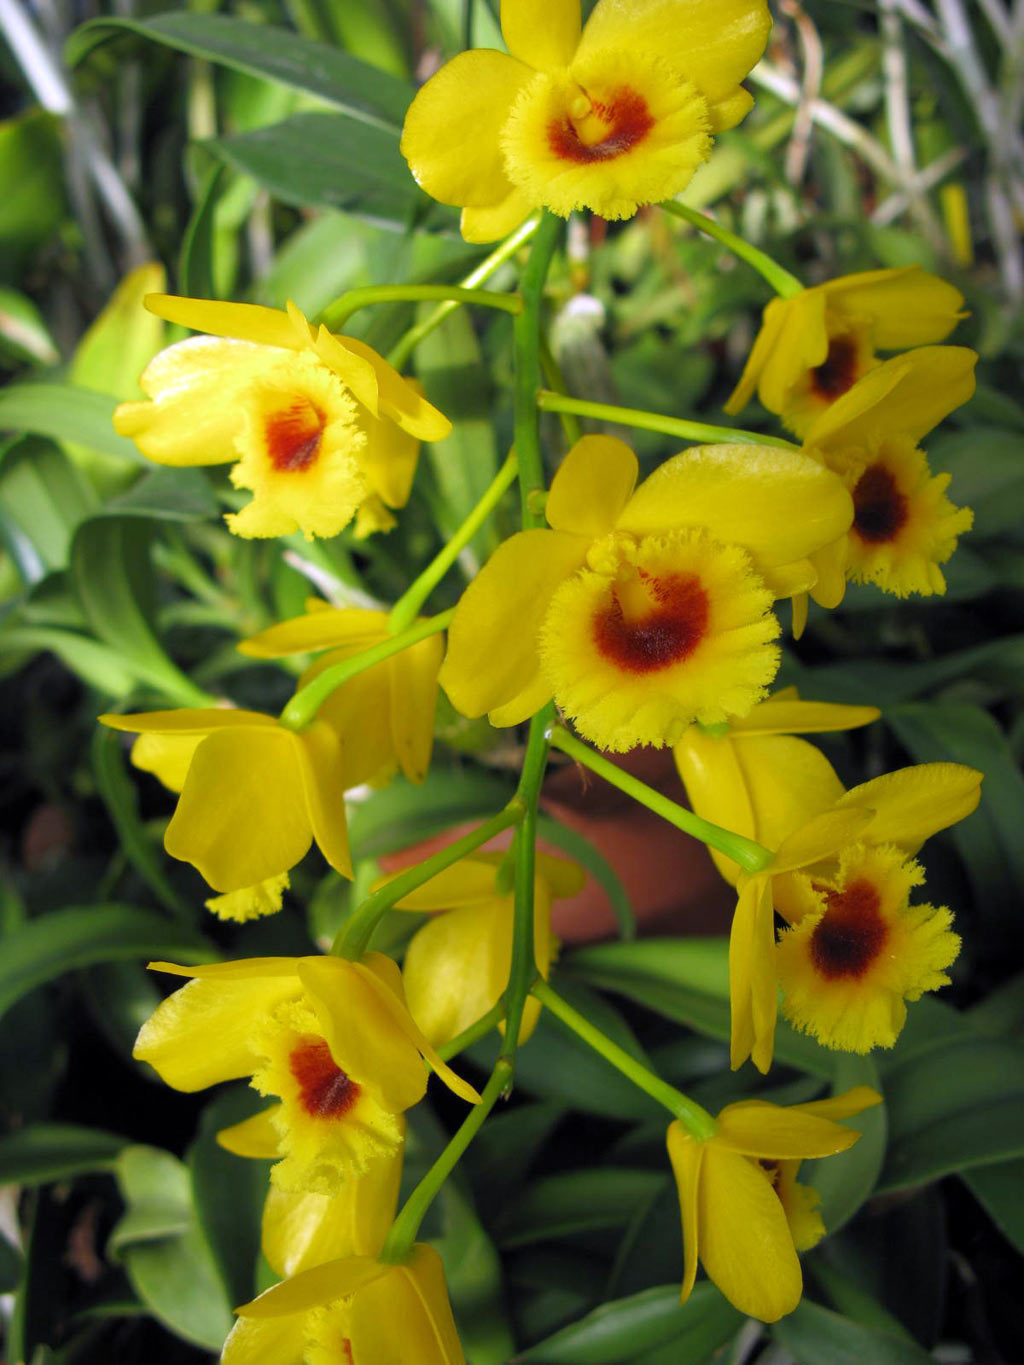 http://www.orchideenwlodarczyk.de/shop/catalog/images/dendrobium_chrysotoxum_suavissimum2_popup.jpg